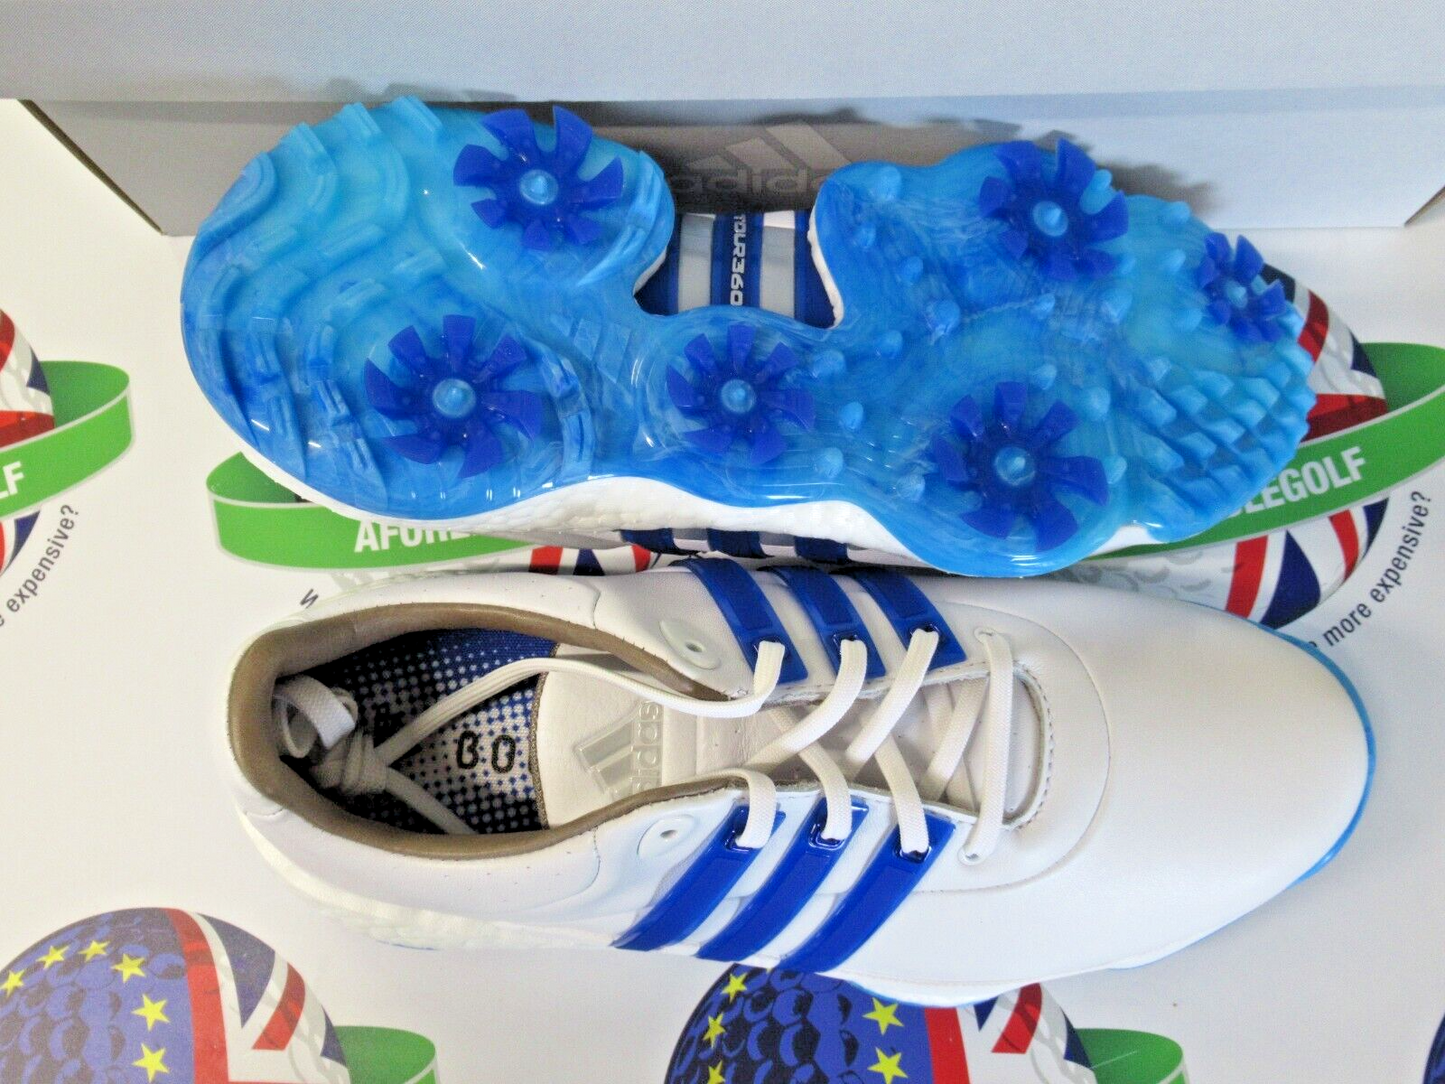 adidas tour 360 22 waterproof golf shoes white/blue uk size 10.5